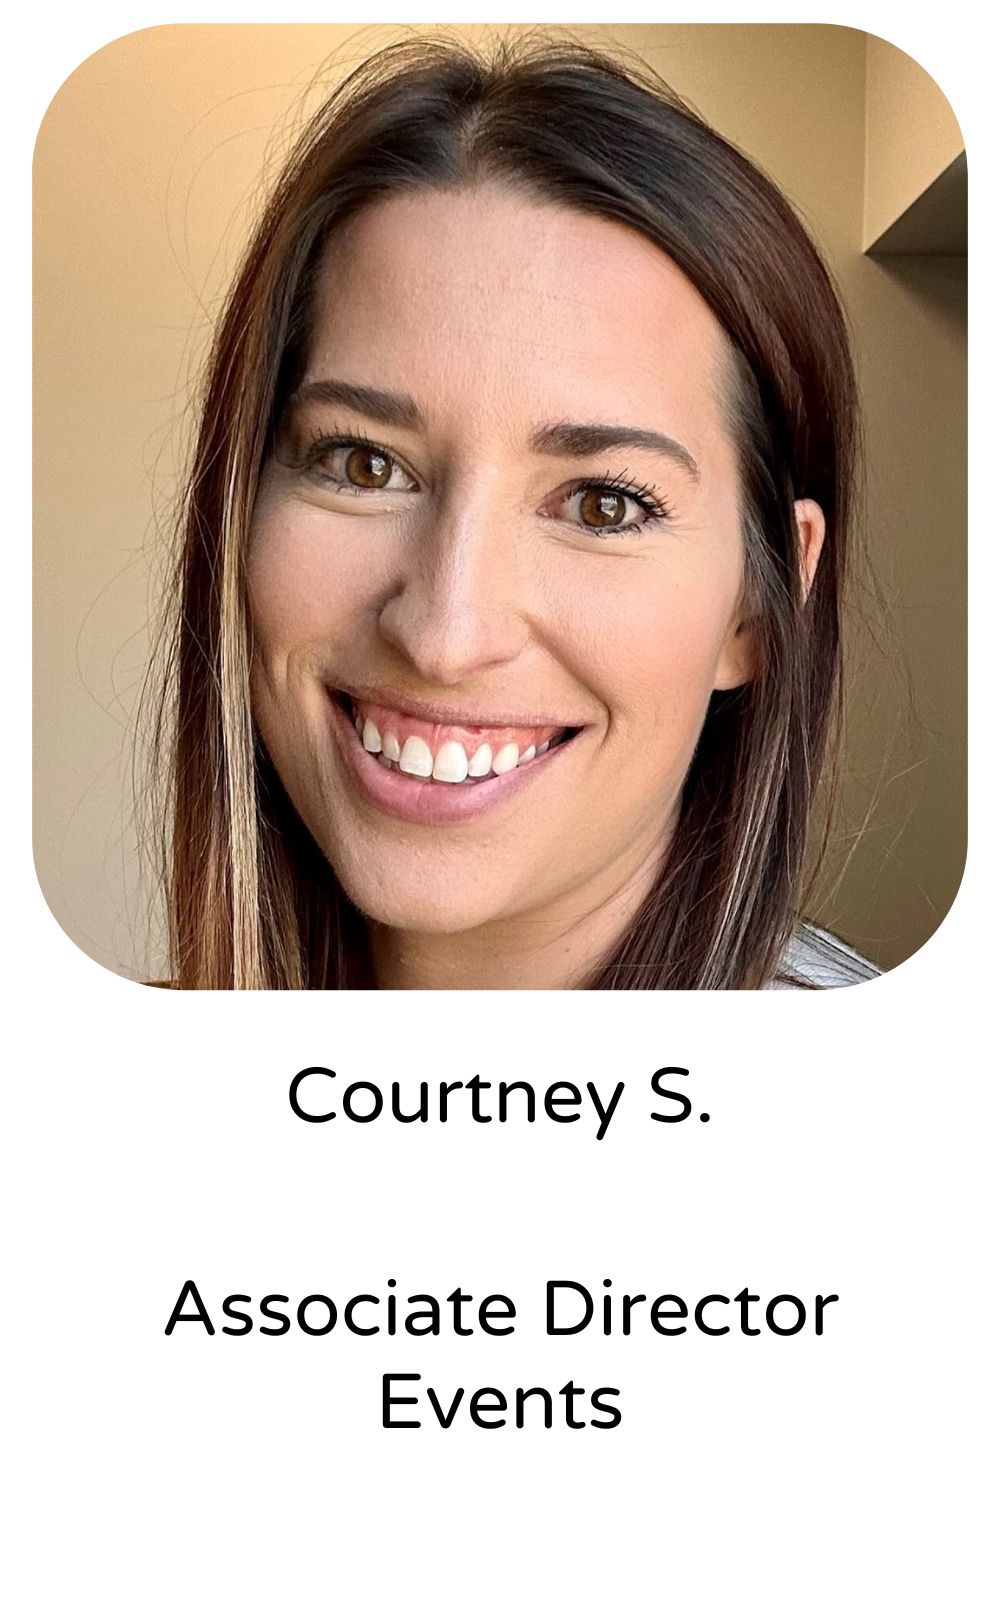 Courtney S., Associate Director, Events